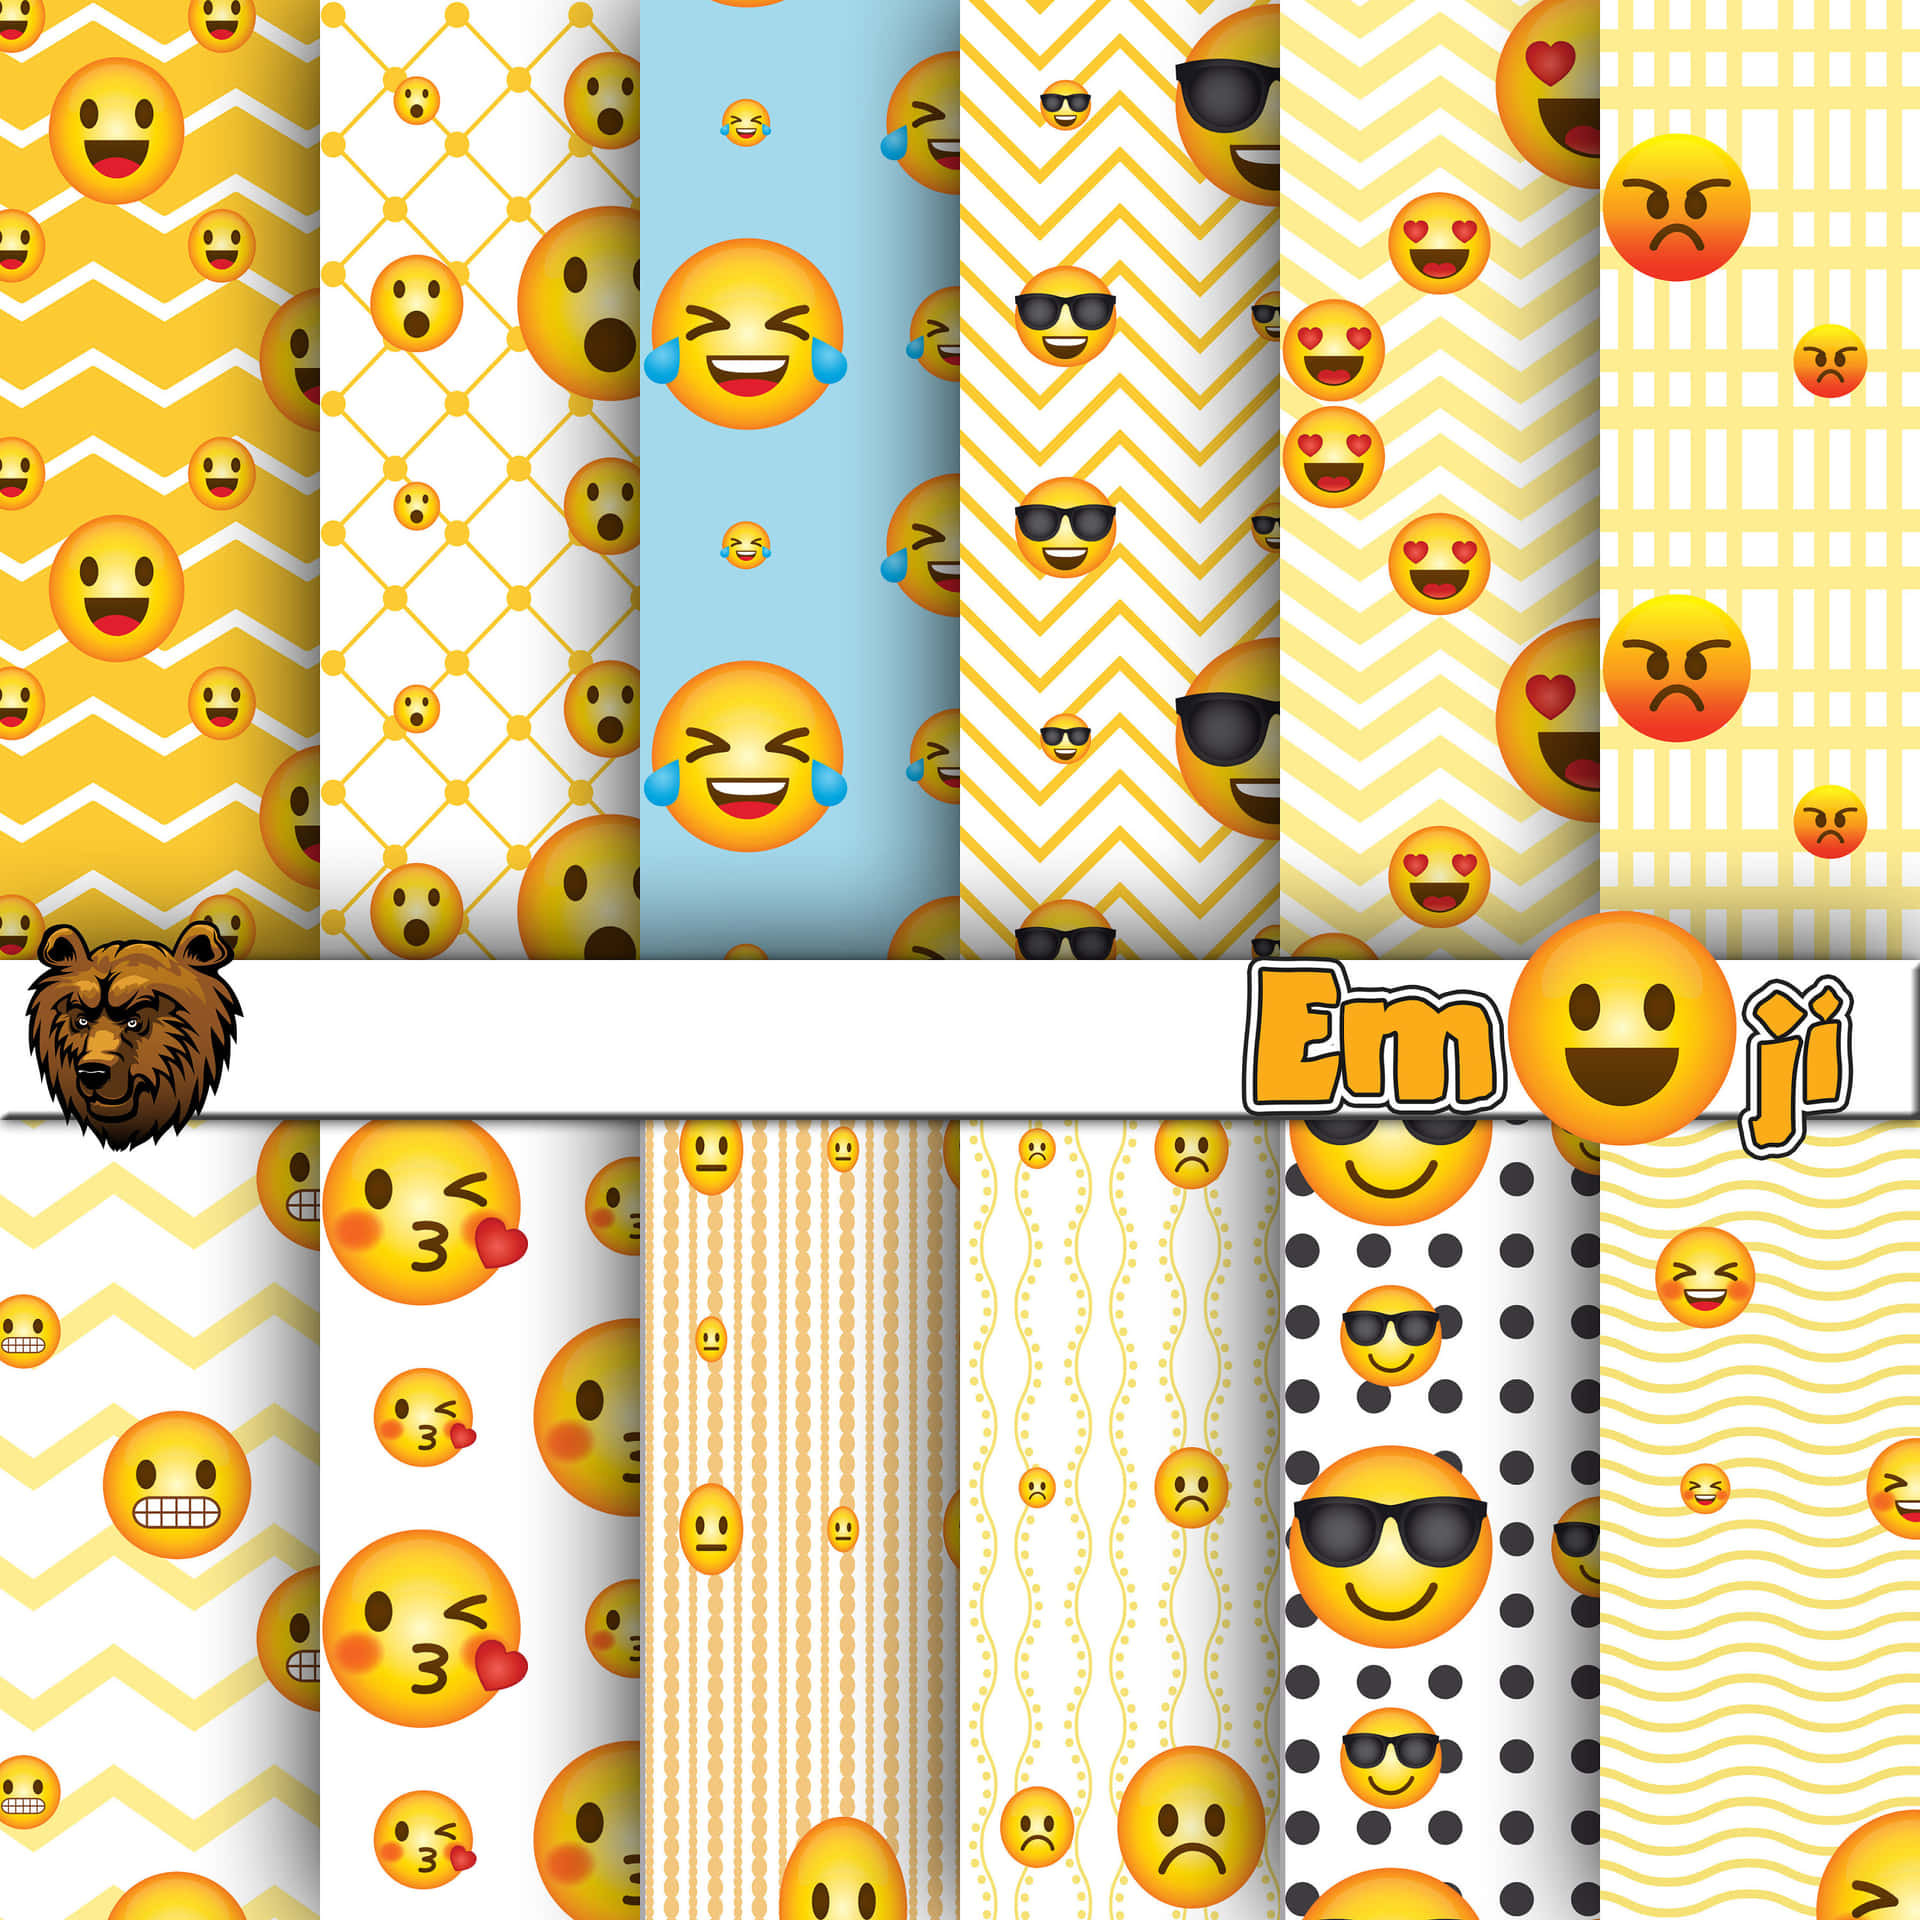 "a Plethora Of Vibrant Emojis"